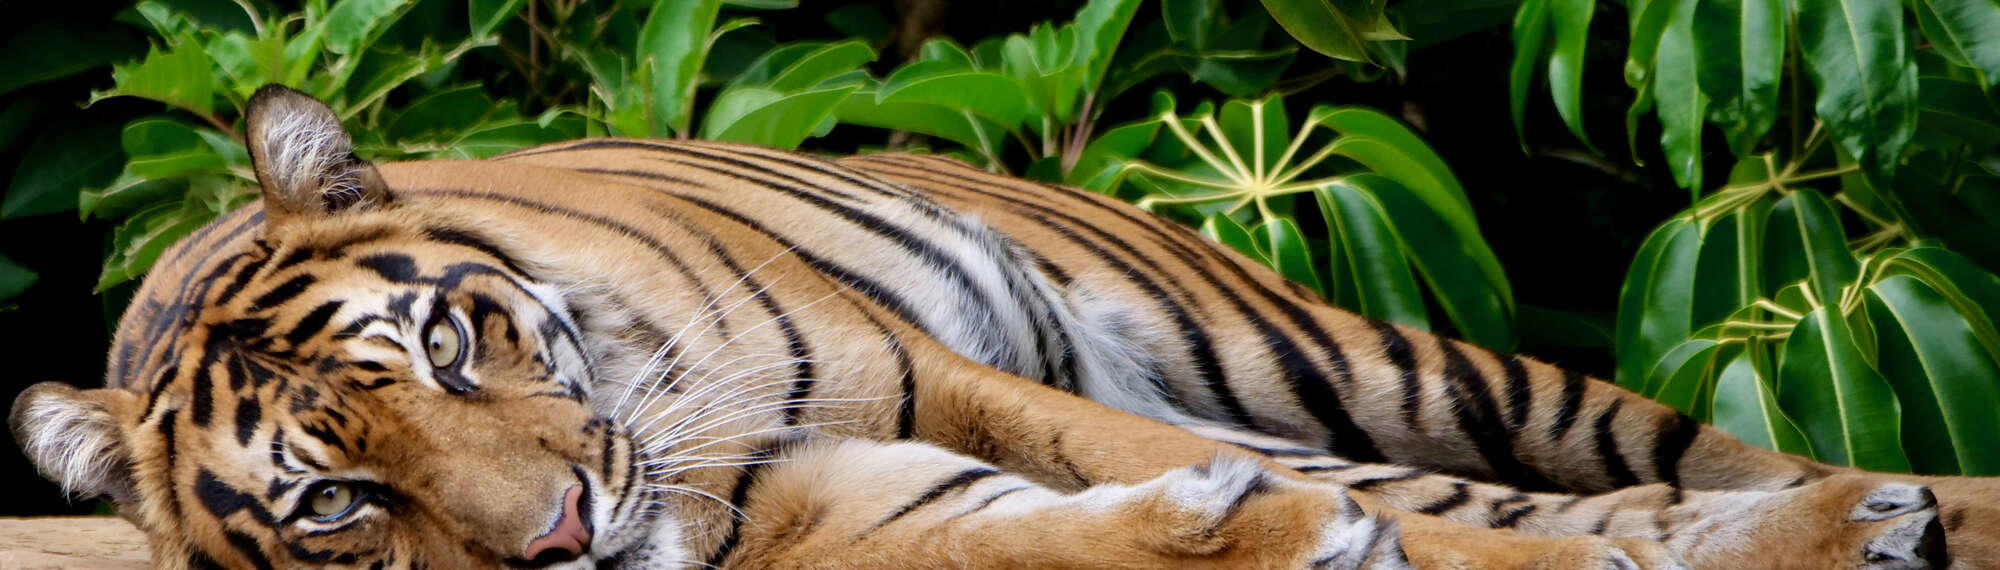 Sumatran Tiger sleeping on the ground